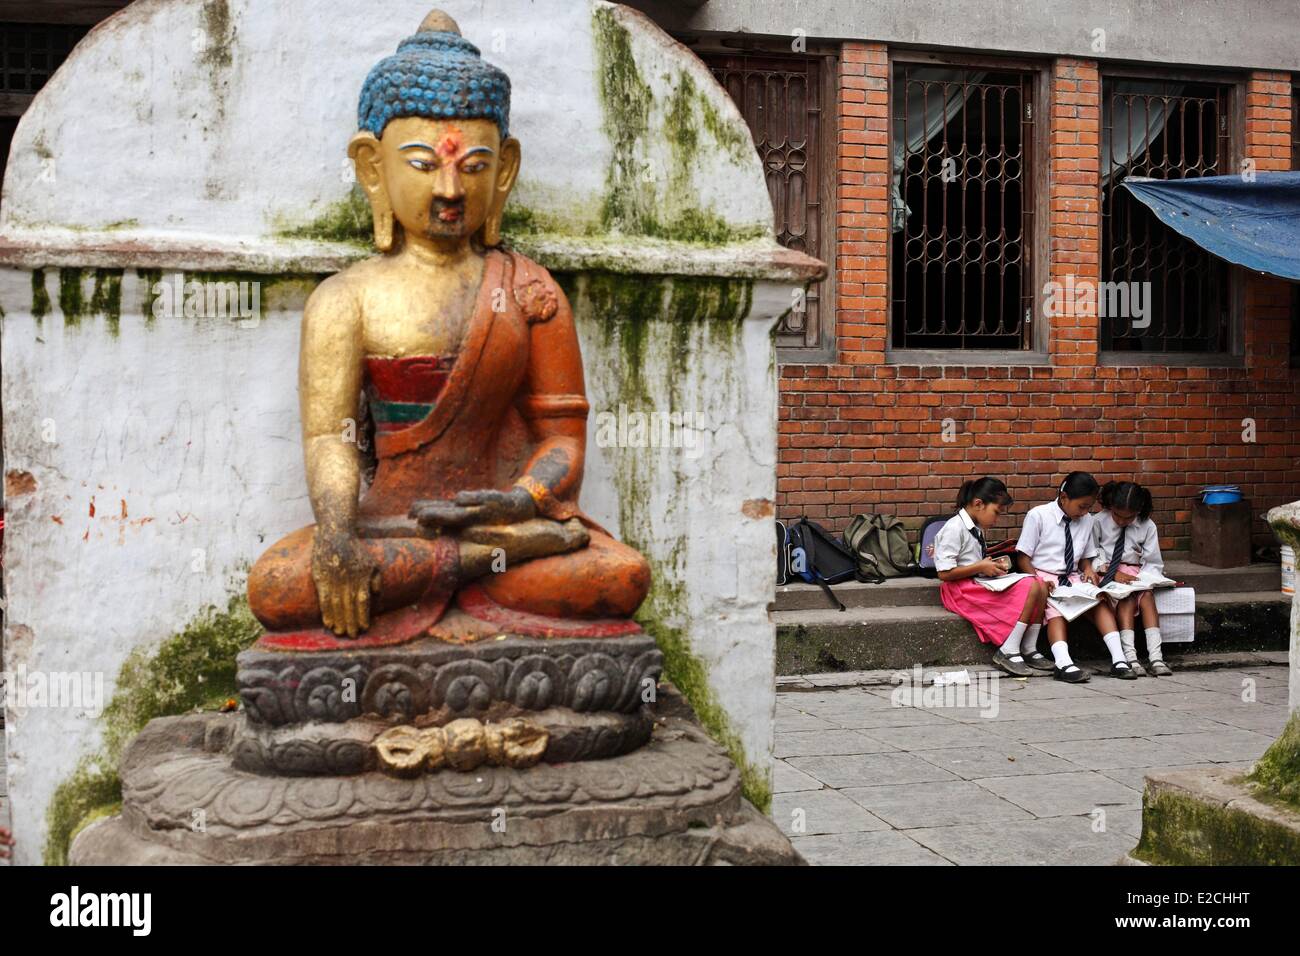 Nepal Kathmandu Valley Listed As World Heritage By Unesco Kathmandu Buddha Statue In The